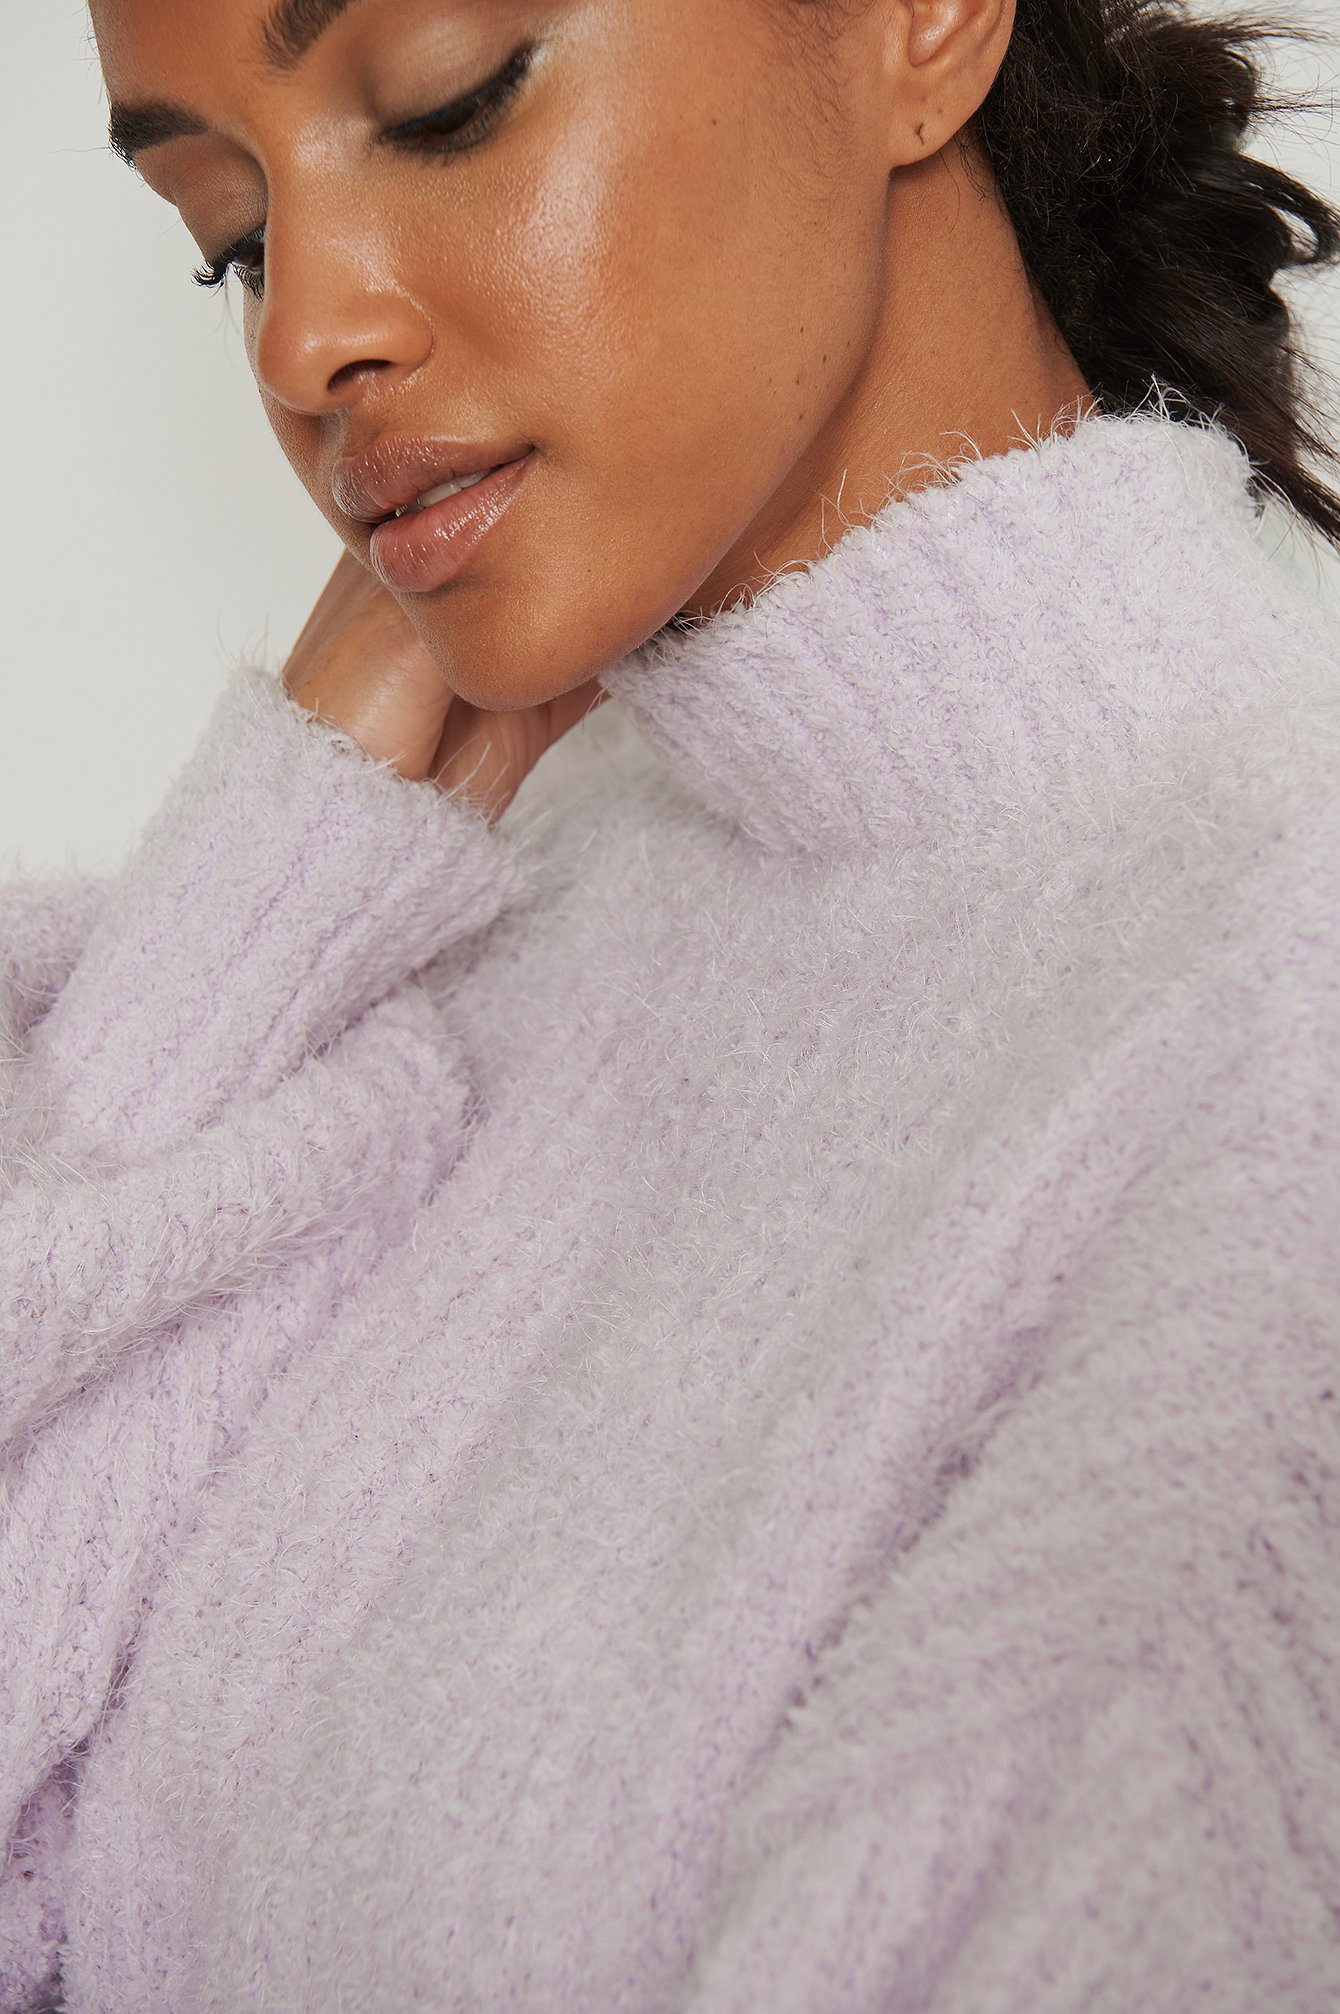 Light Purple Fluffy Knitted Sweater